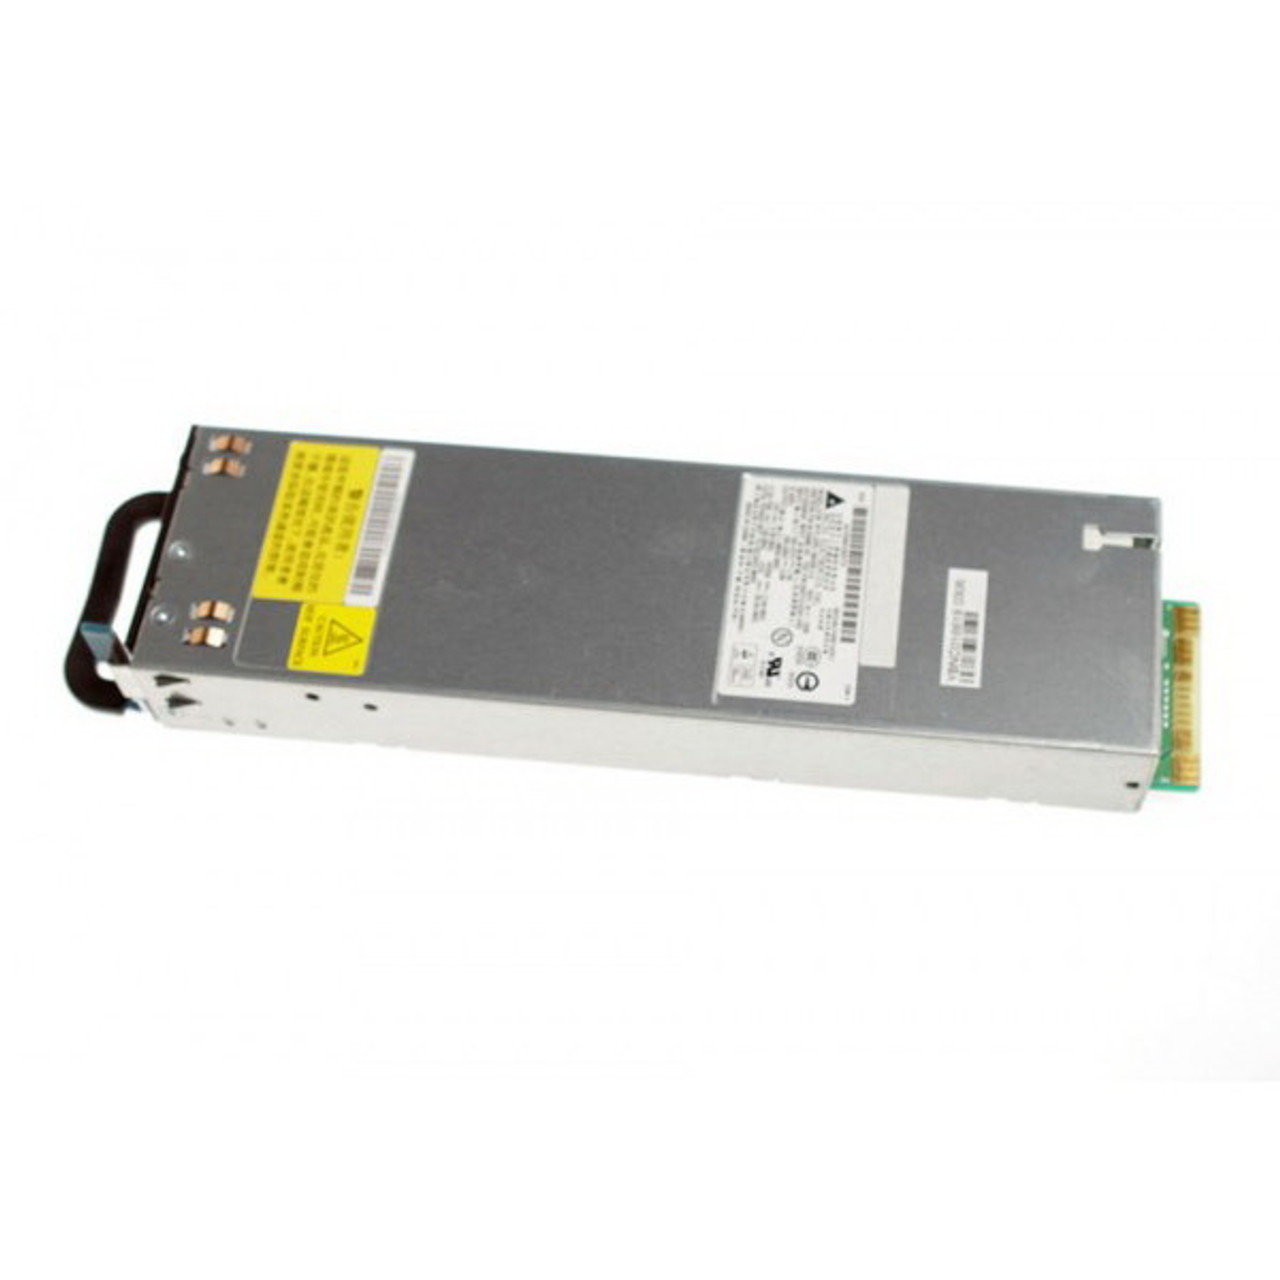 DPS-400GB-1 - Apple 400 Watts Power Supply for Xserve G5 (January 2005) Server (Refurbished)